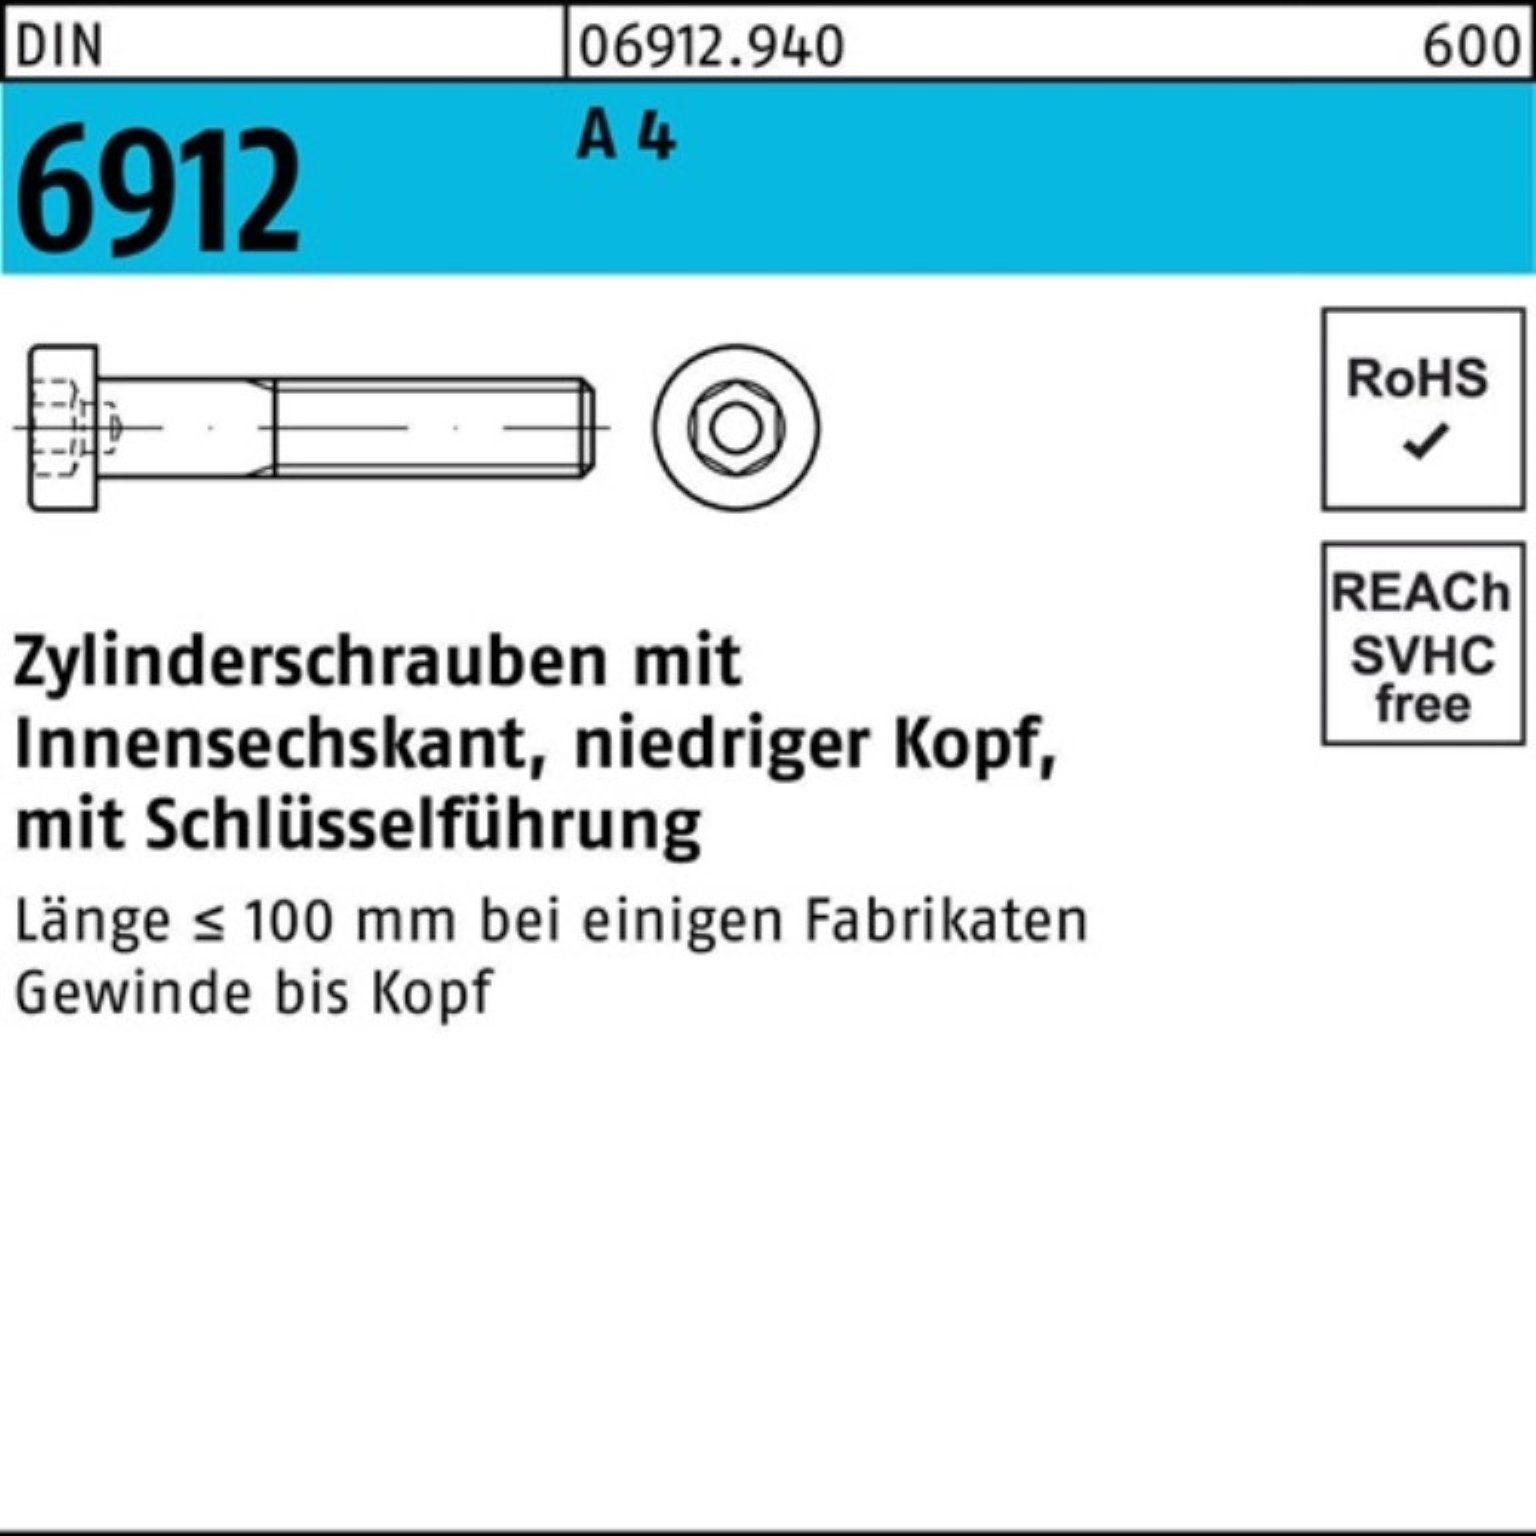 200er Zylinderschraube Reyher Pack Stück Innen-6kt 40 D 4 M4x 6912 A Zylinderschraube 200 DIN